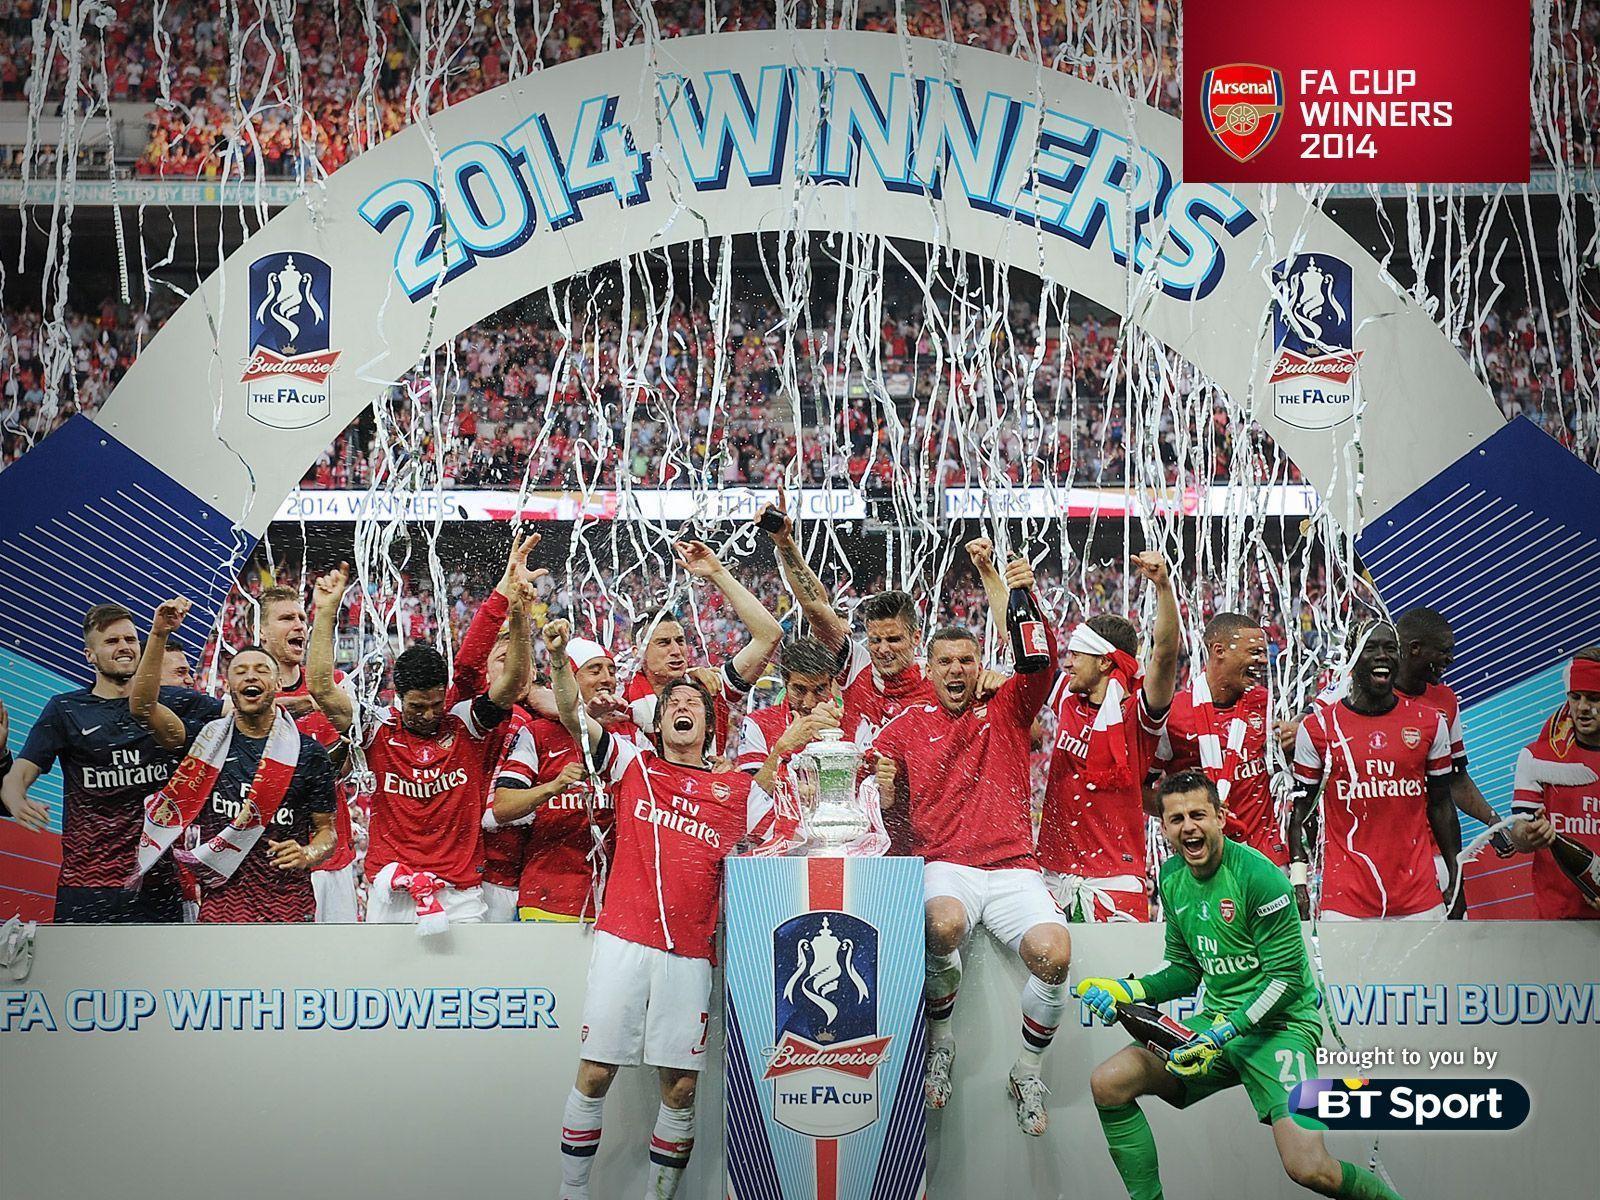 gun__1400488179_1 Arsenal Football HD free wallpaper background